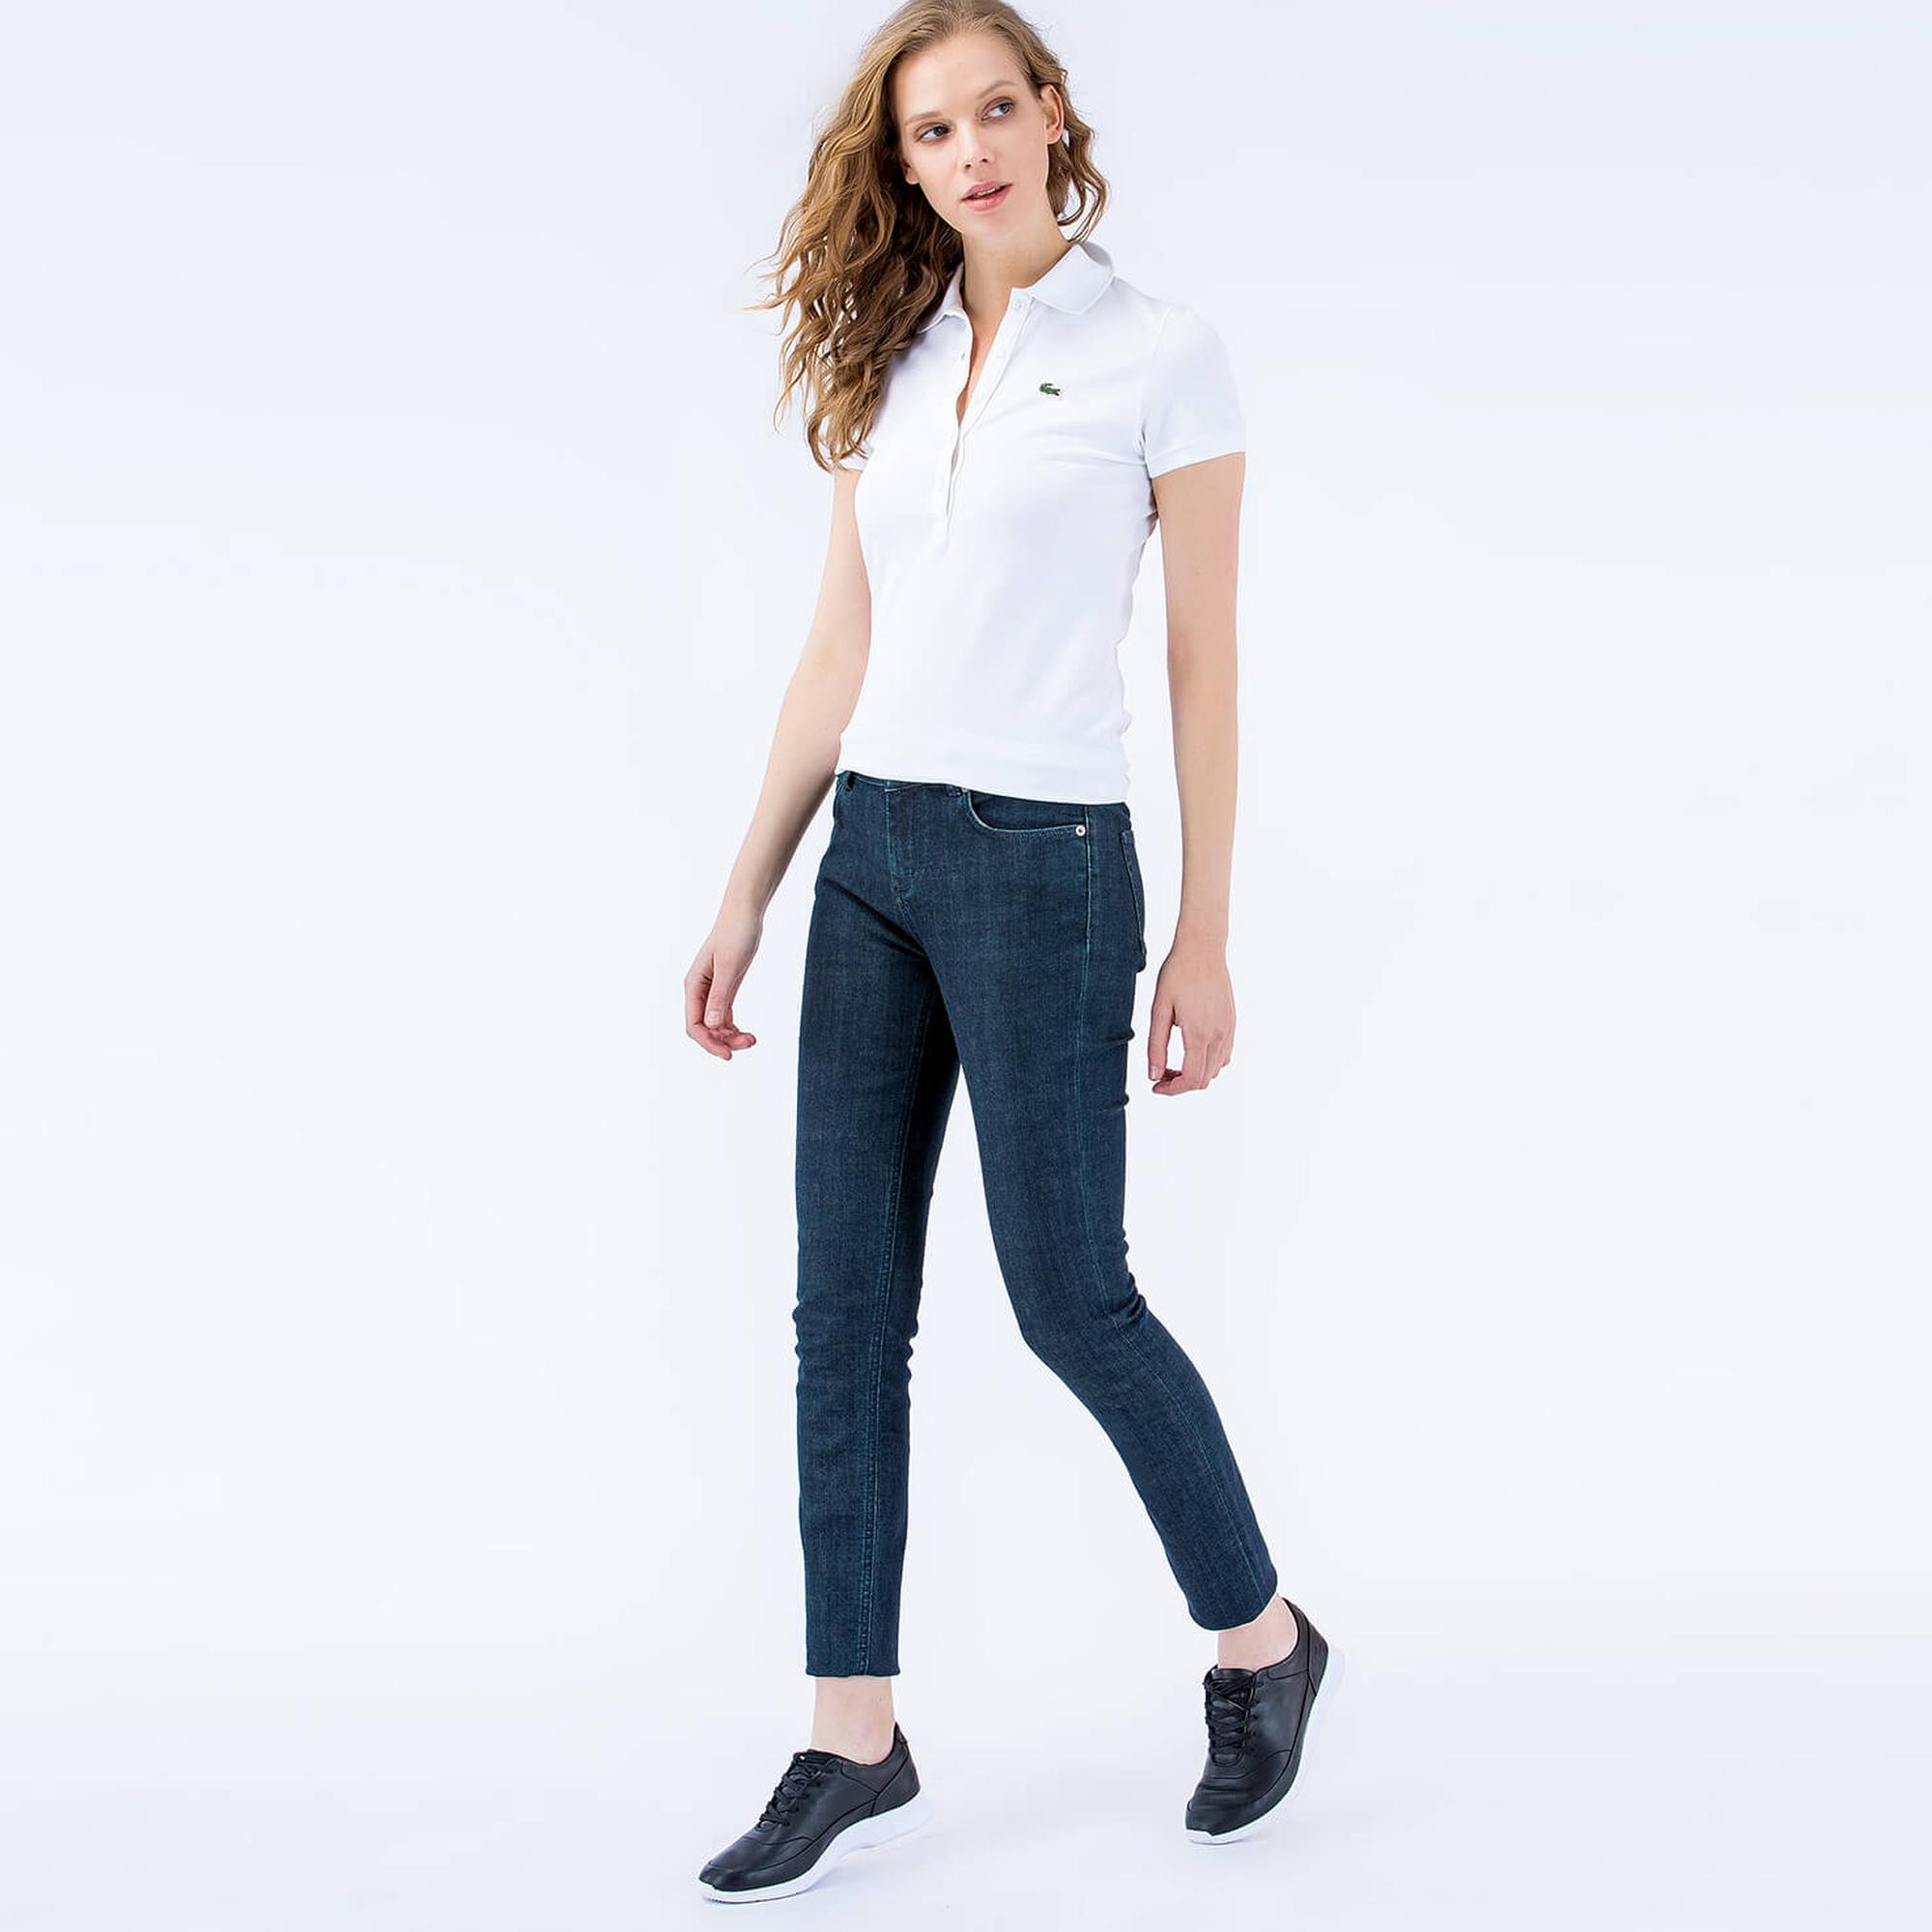 Lacoste Women's Slim Fit Stretch Cotton 